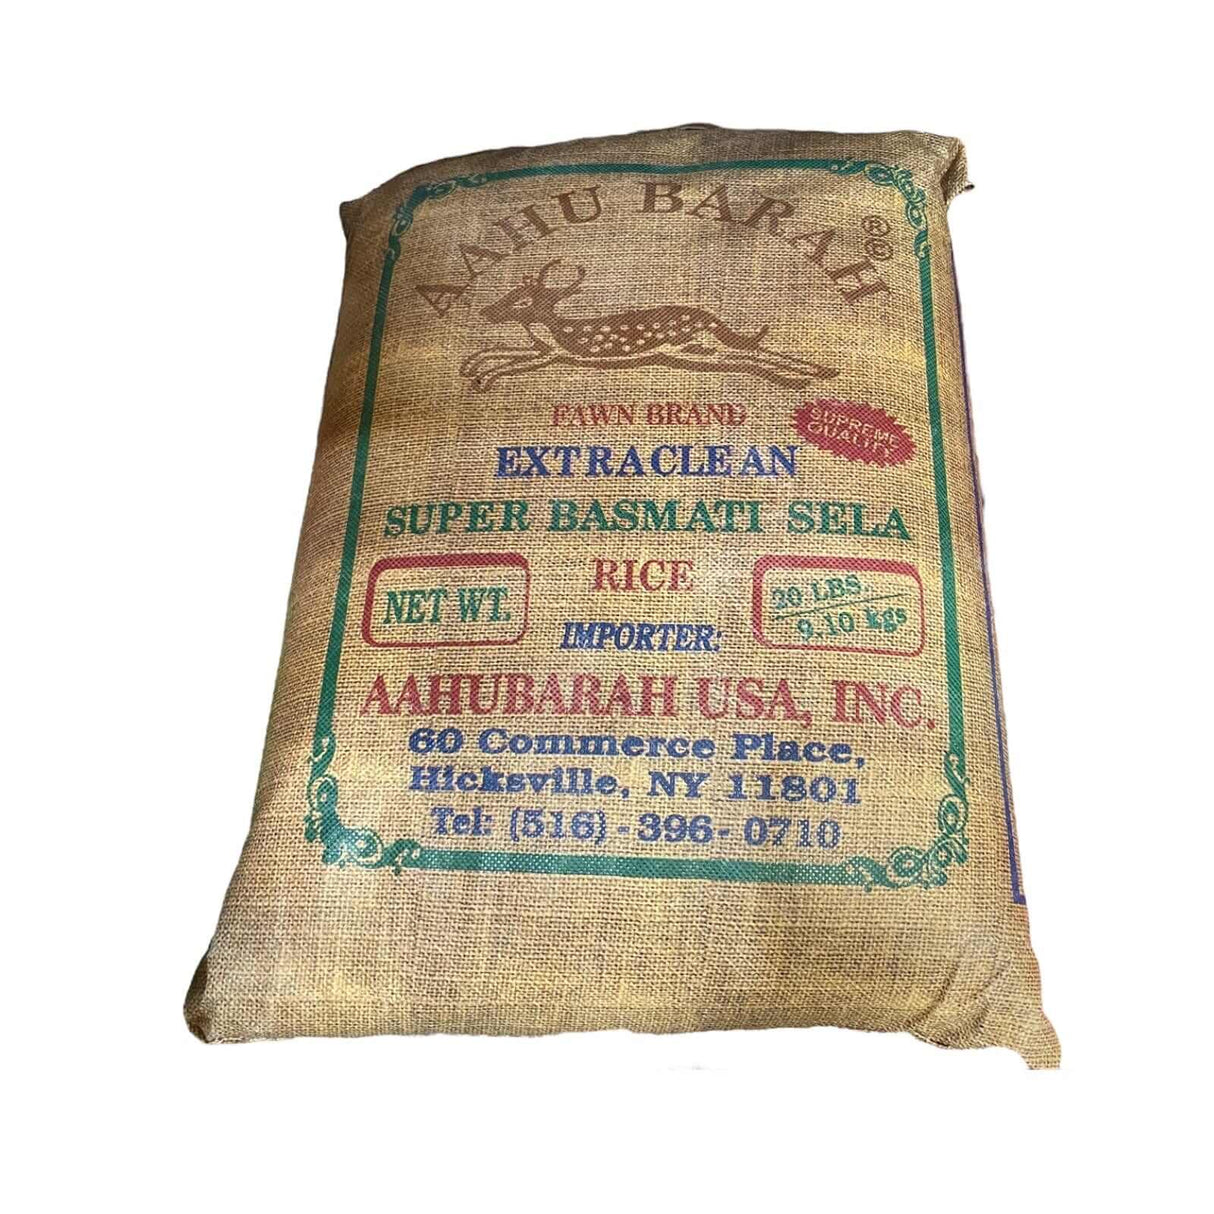 Fawn Brand Super Basmati Sela Rice